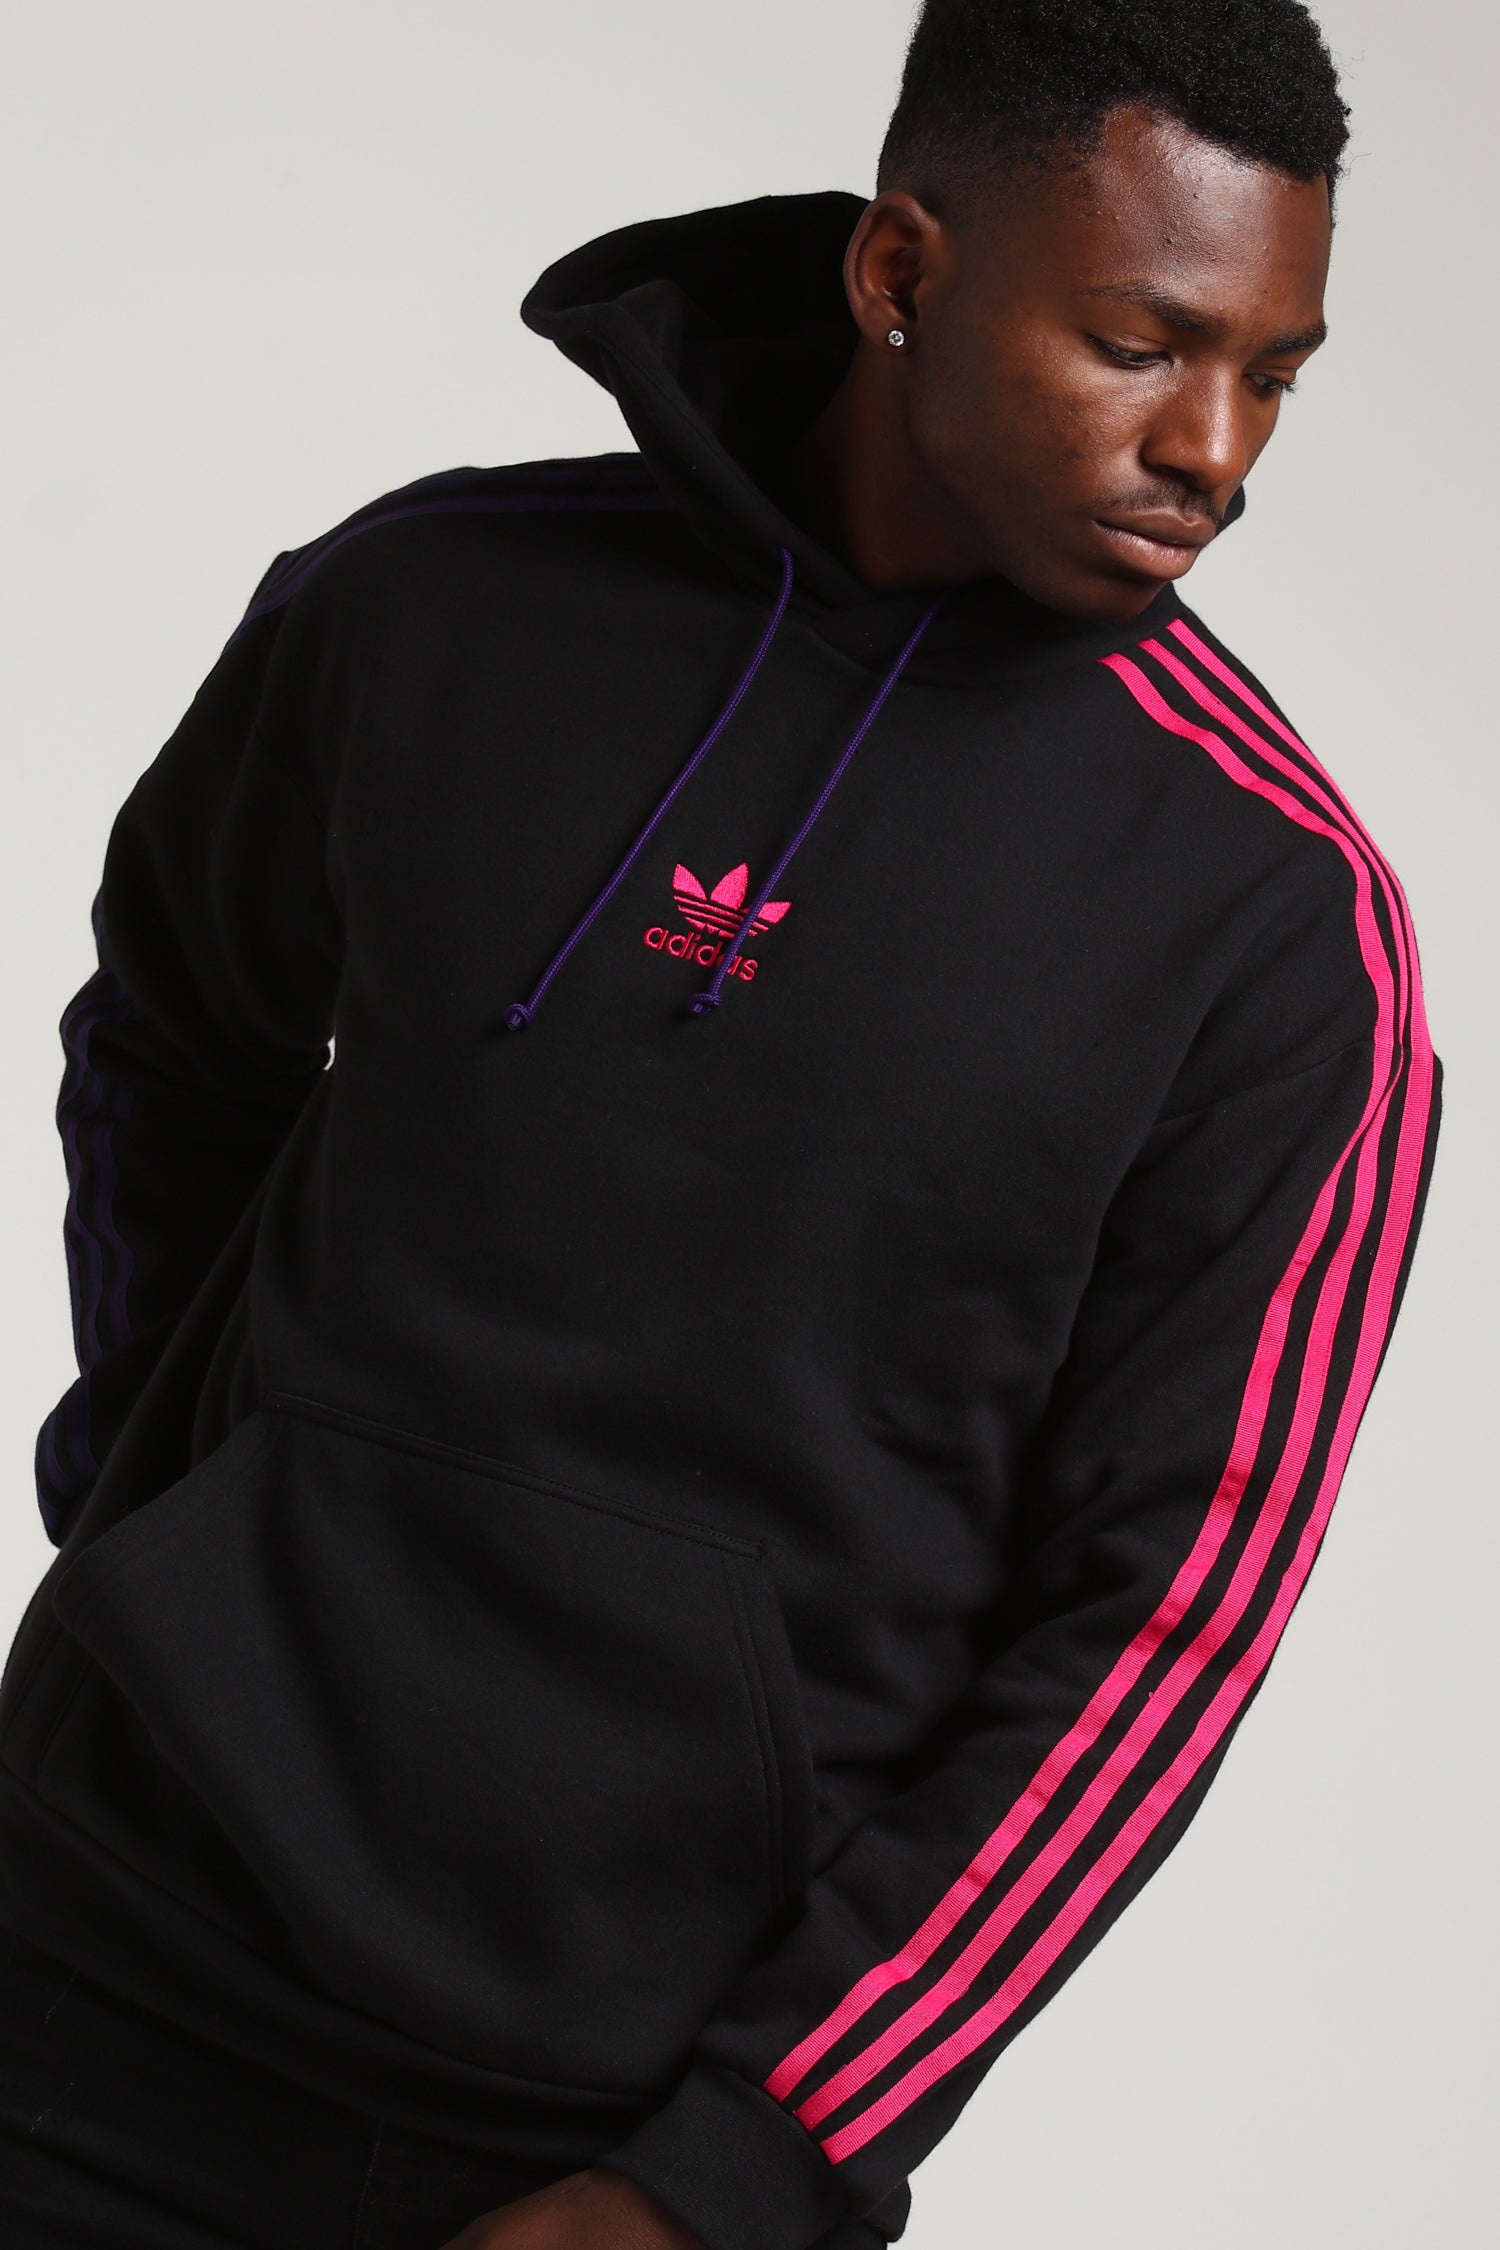 Adidas 3 Stripe Hoody Black/Purple/Pink 